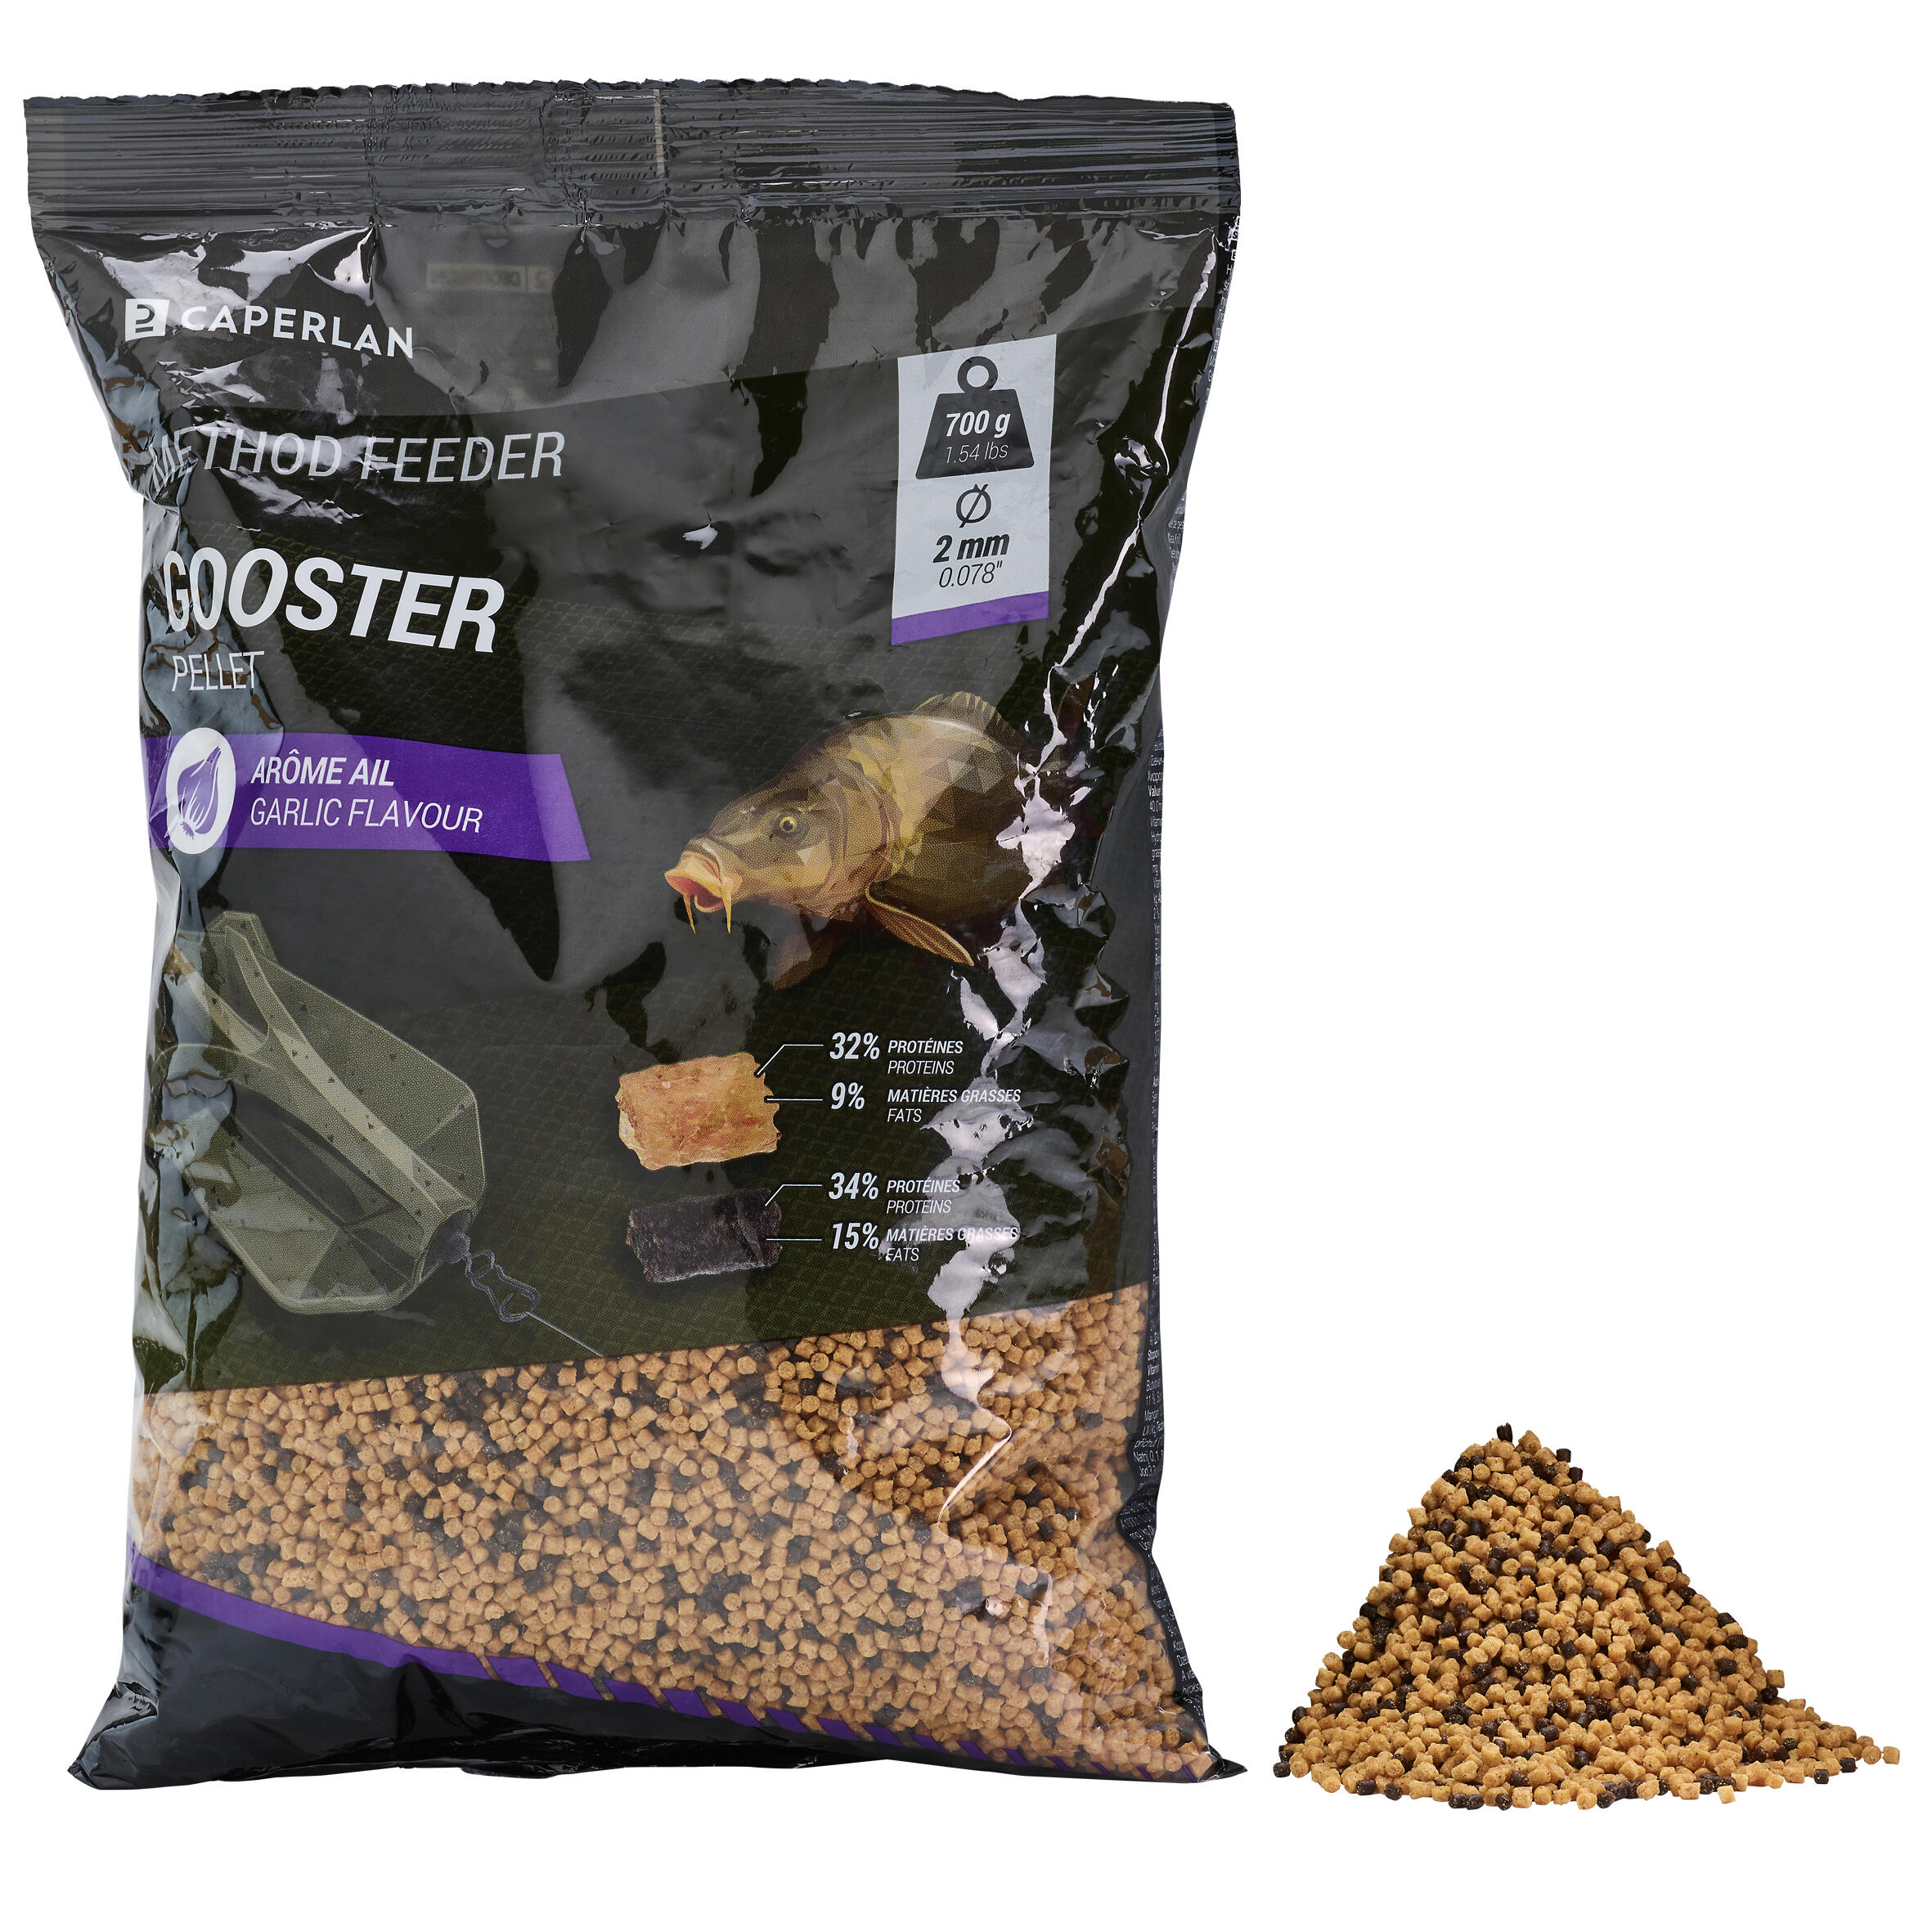 Caperlan Gooster pellet method feeder czosnek 700 g